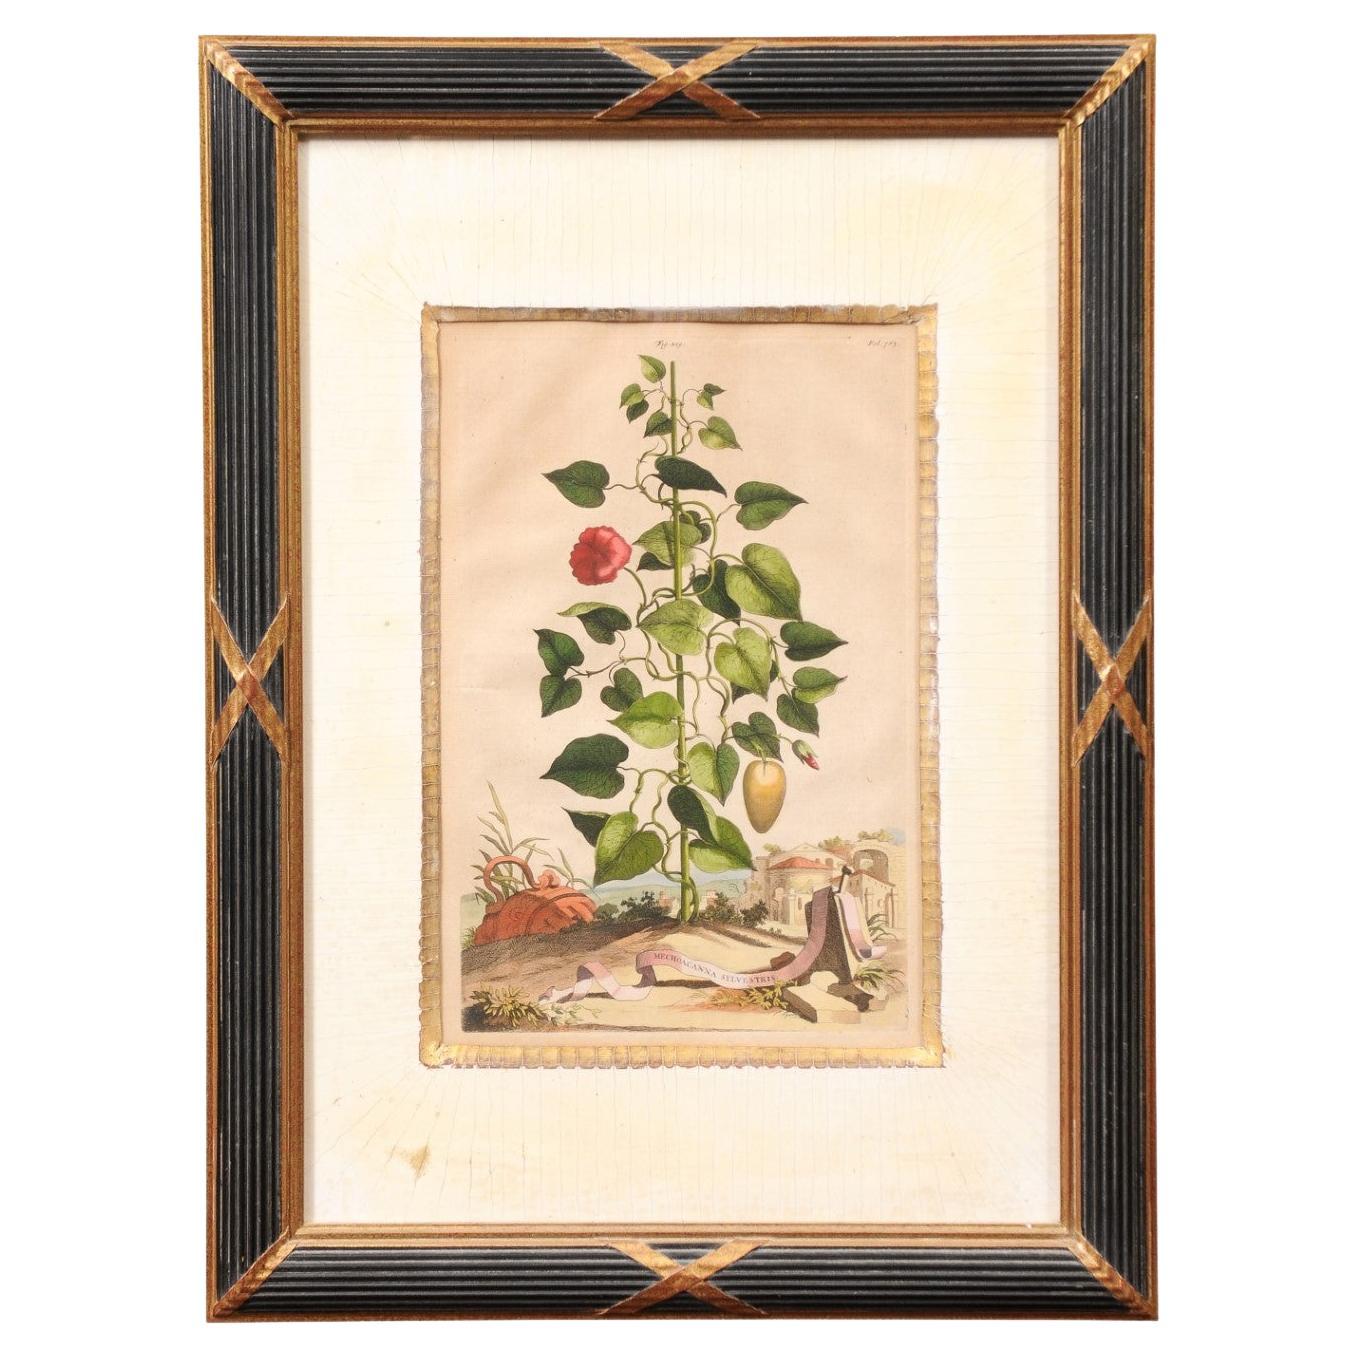 Framed Copper Botanical Engraving by Doctor & Botanist Abraham Muntings